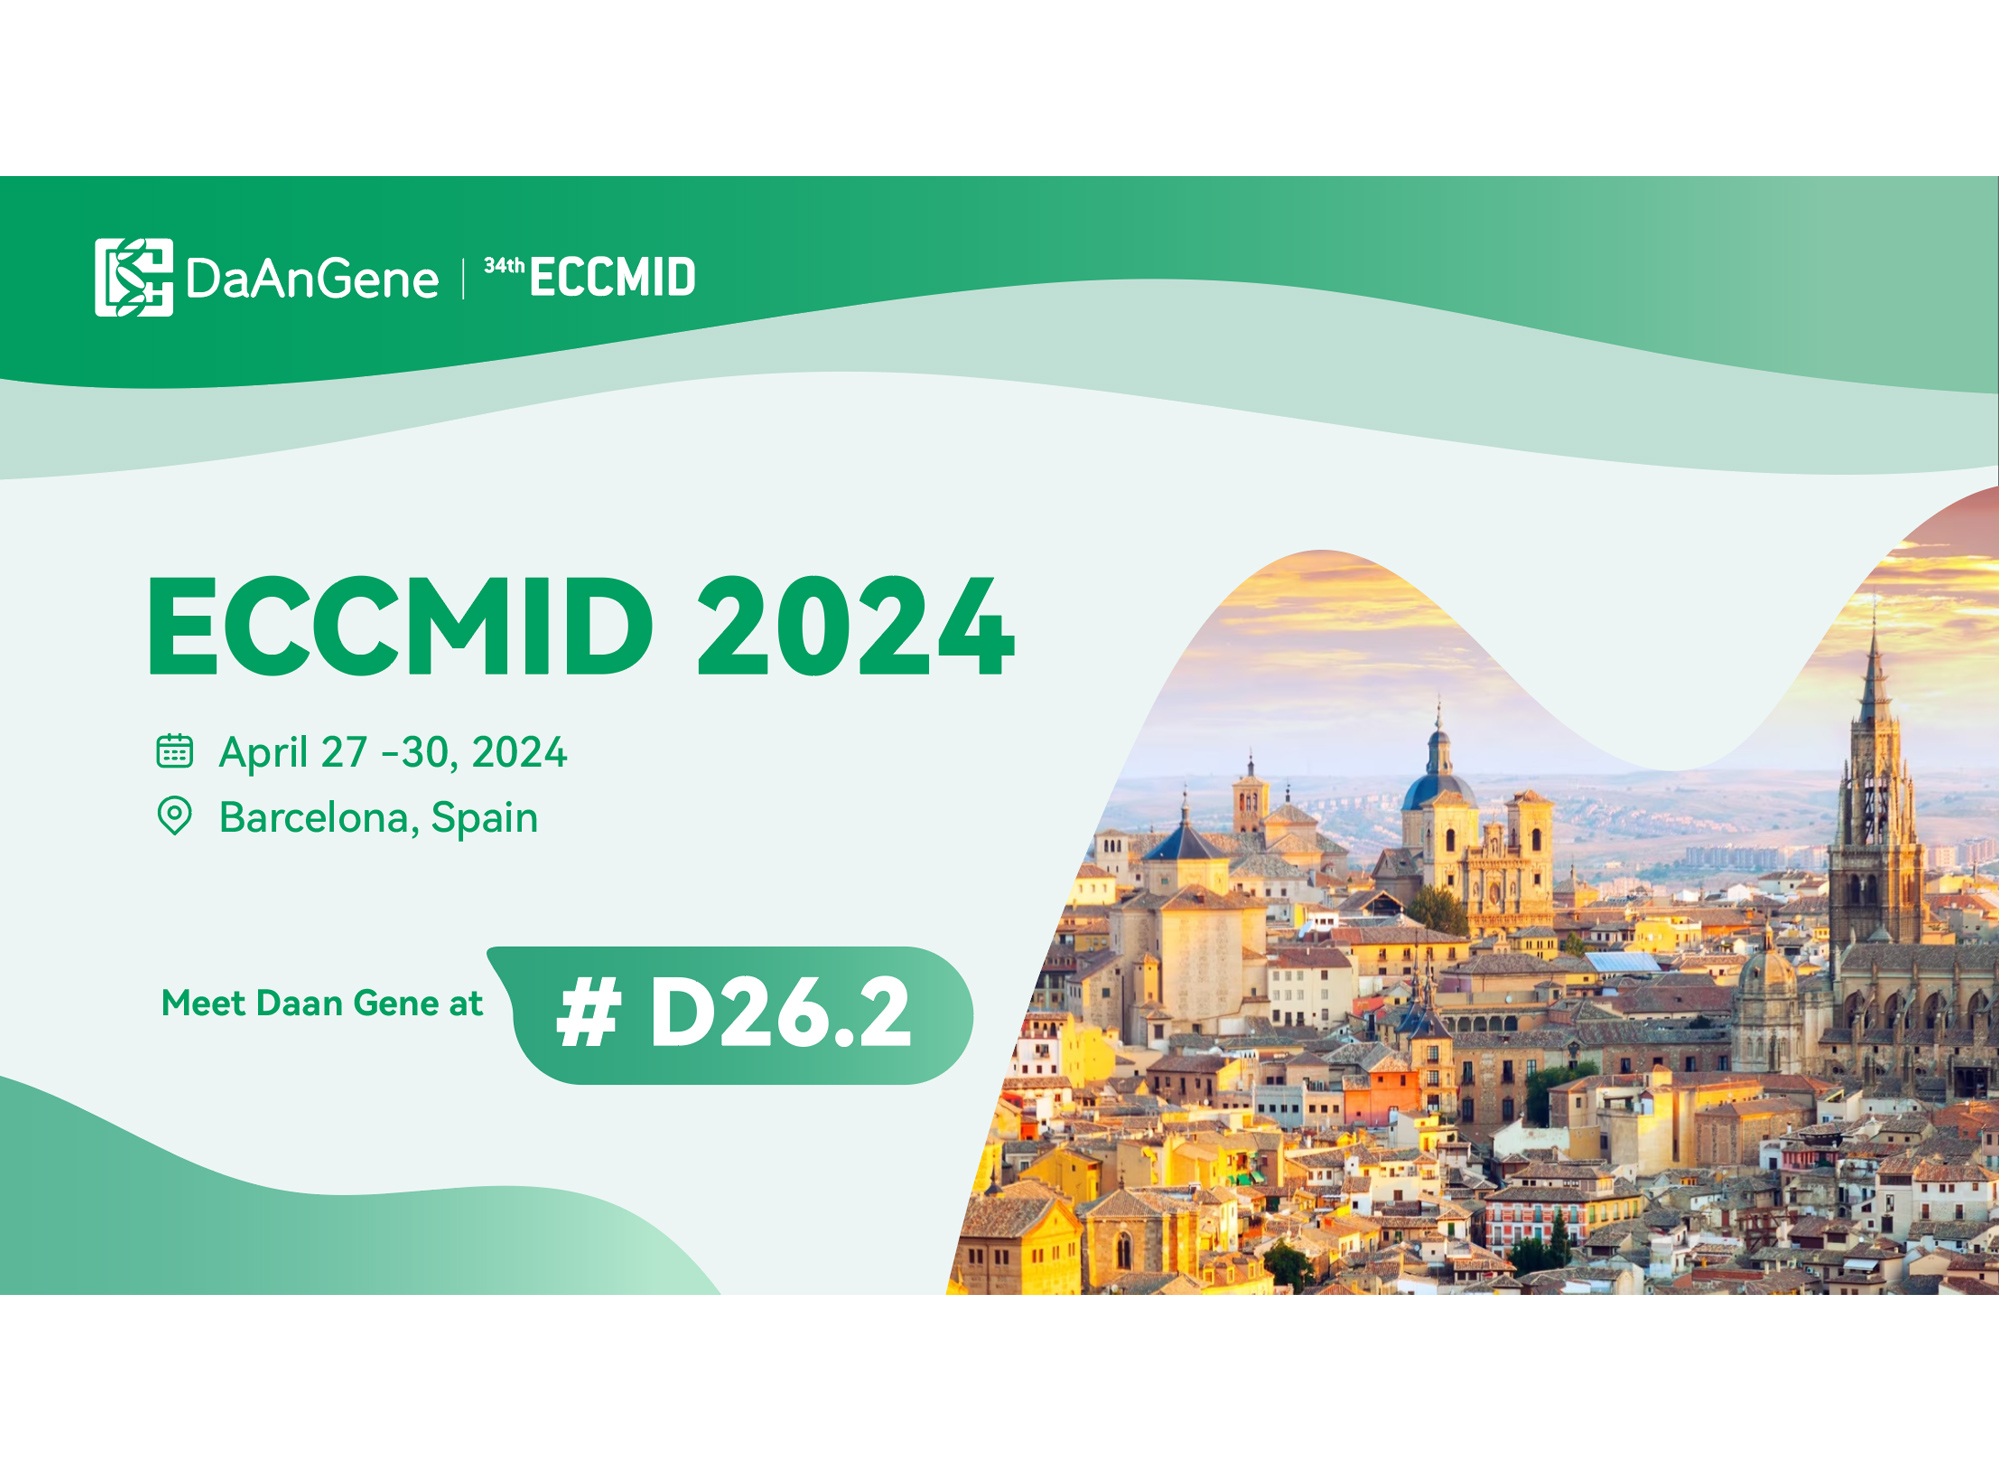 Join Daan Gene at ECCMID 2024 in Barcelona!